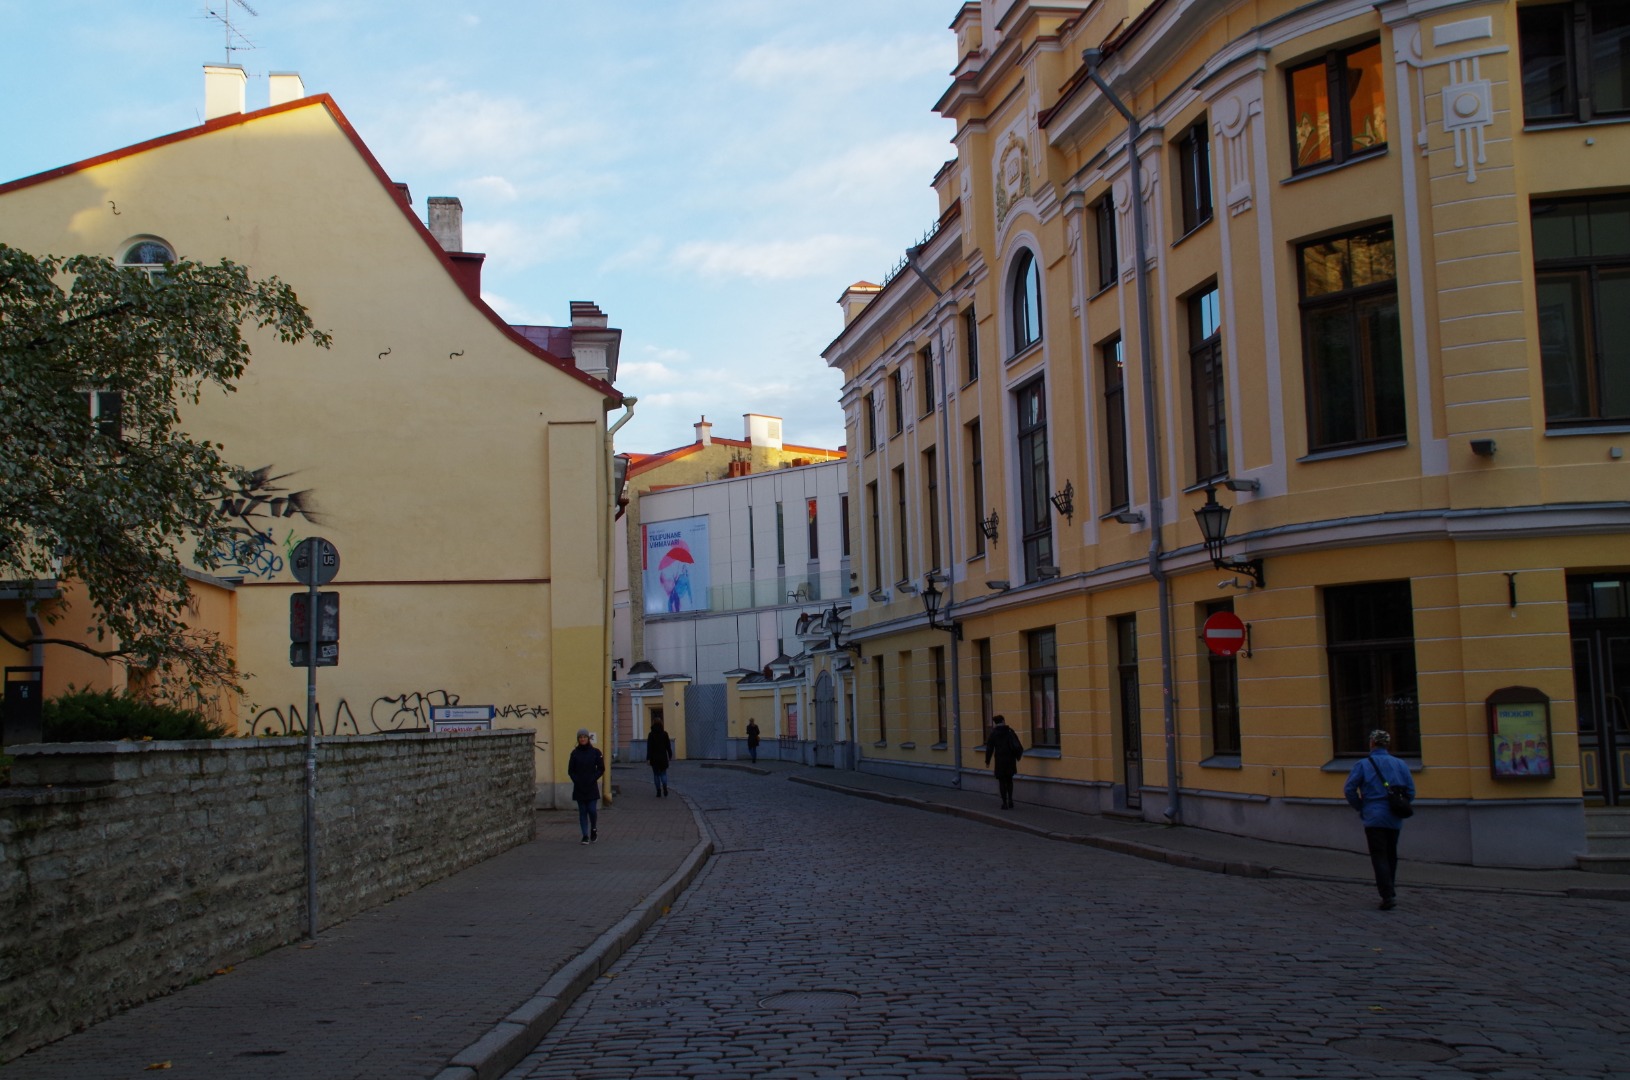 Nunne Street in Tallinn Old Town rephoto